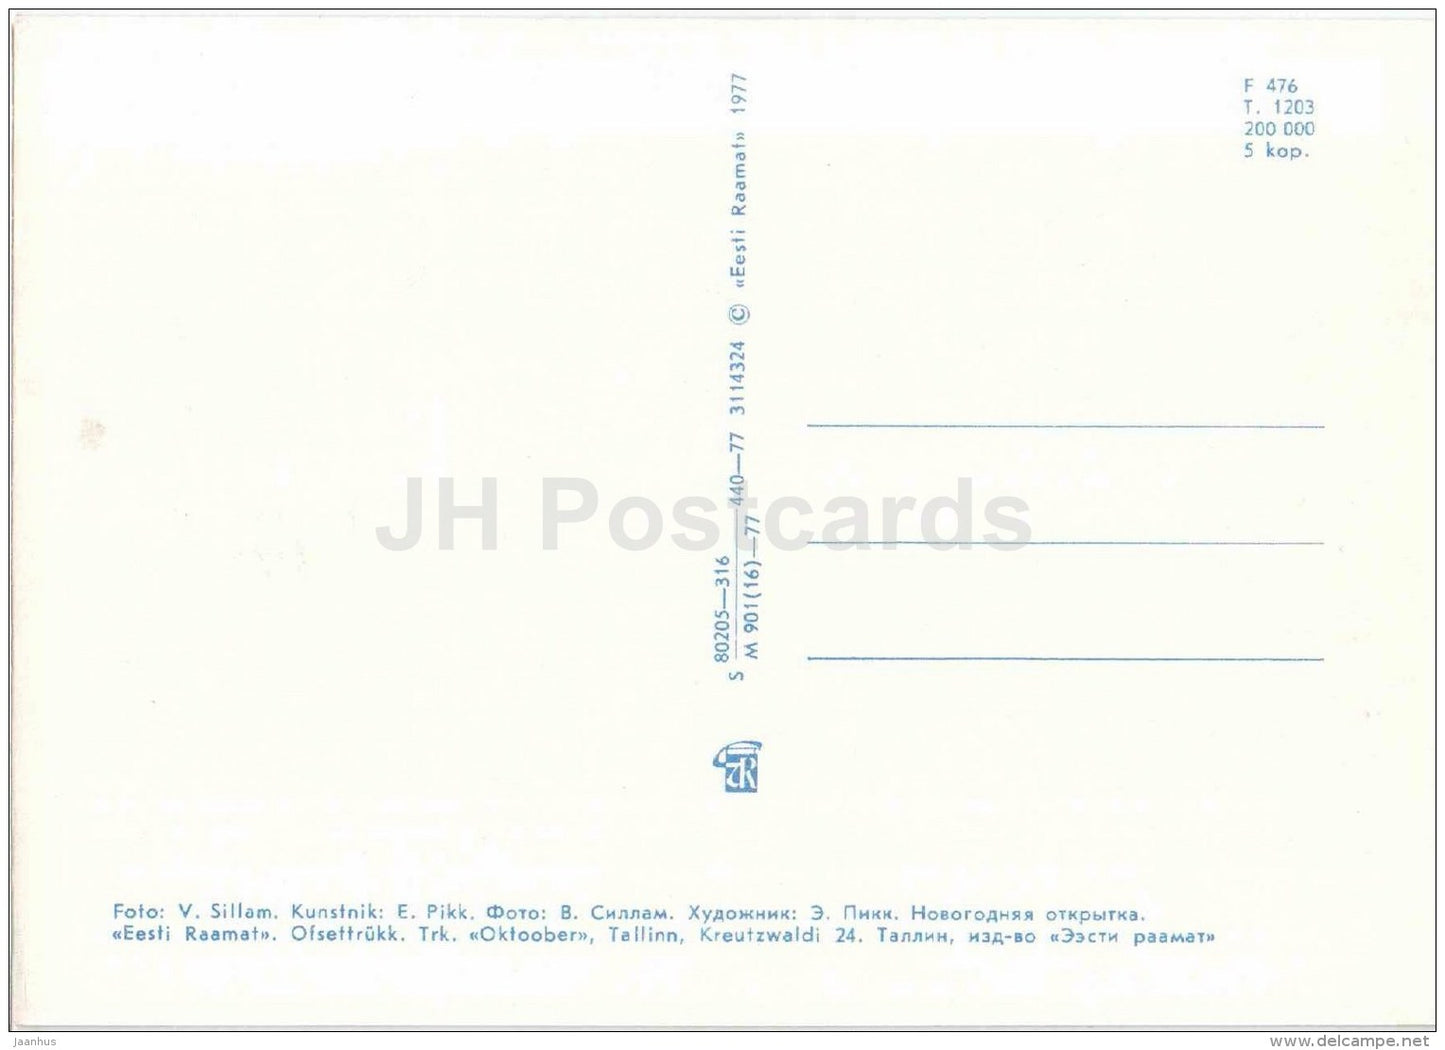 New Year Greeting card - books - 1977 - Estonia USSR - unused - JH Postcards